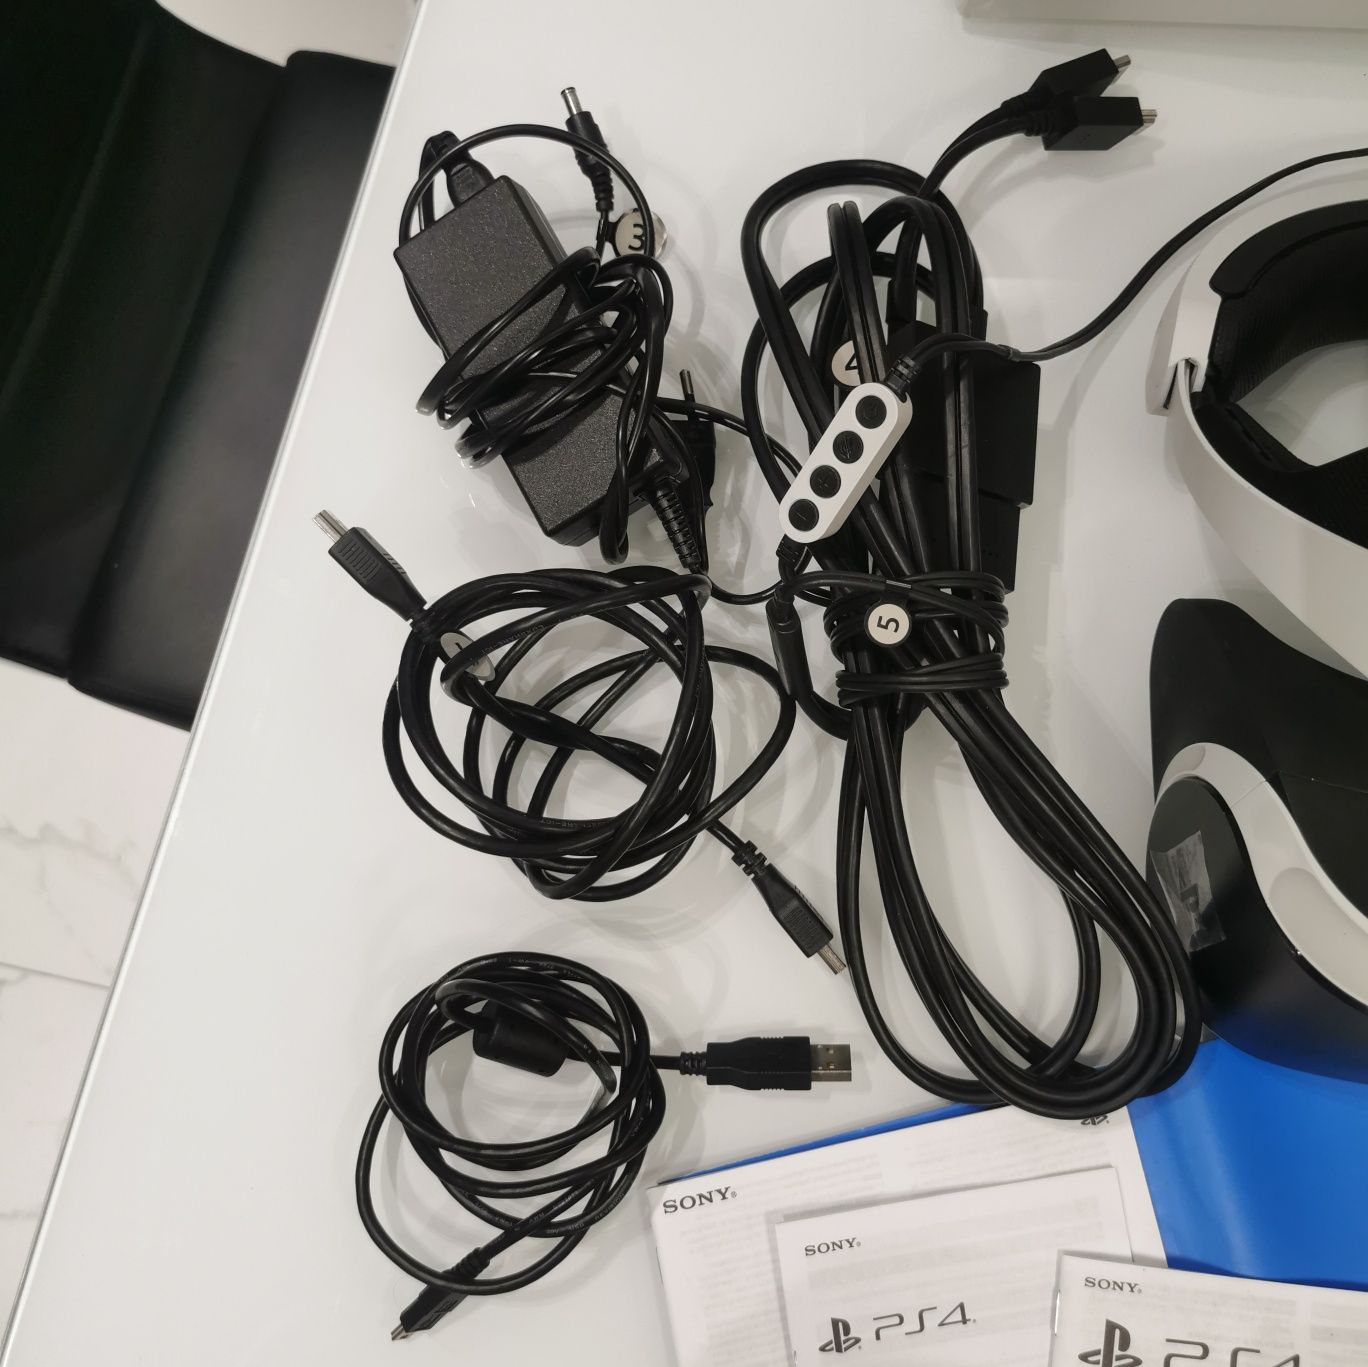 Gogle PS VR PlayStation VR jak nowe